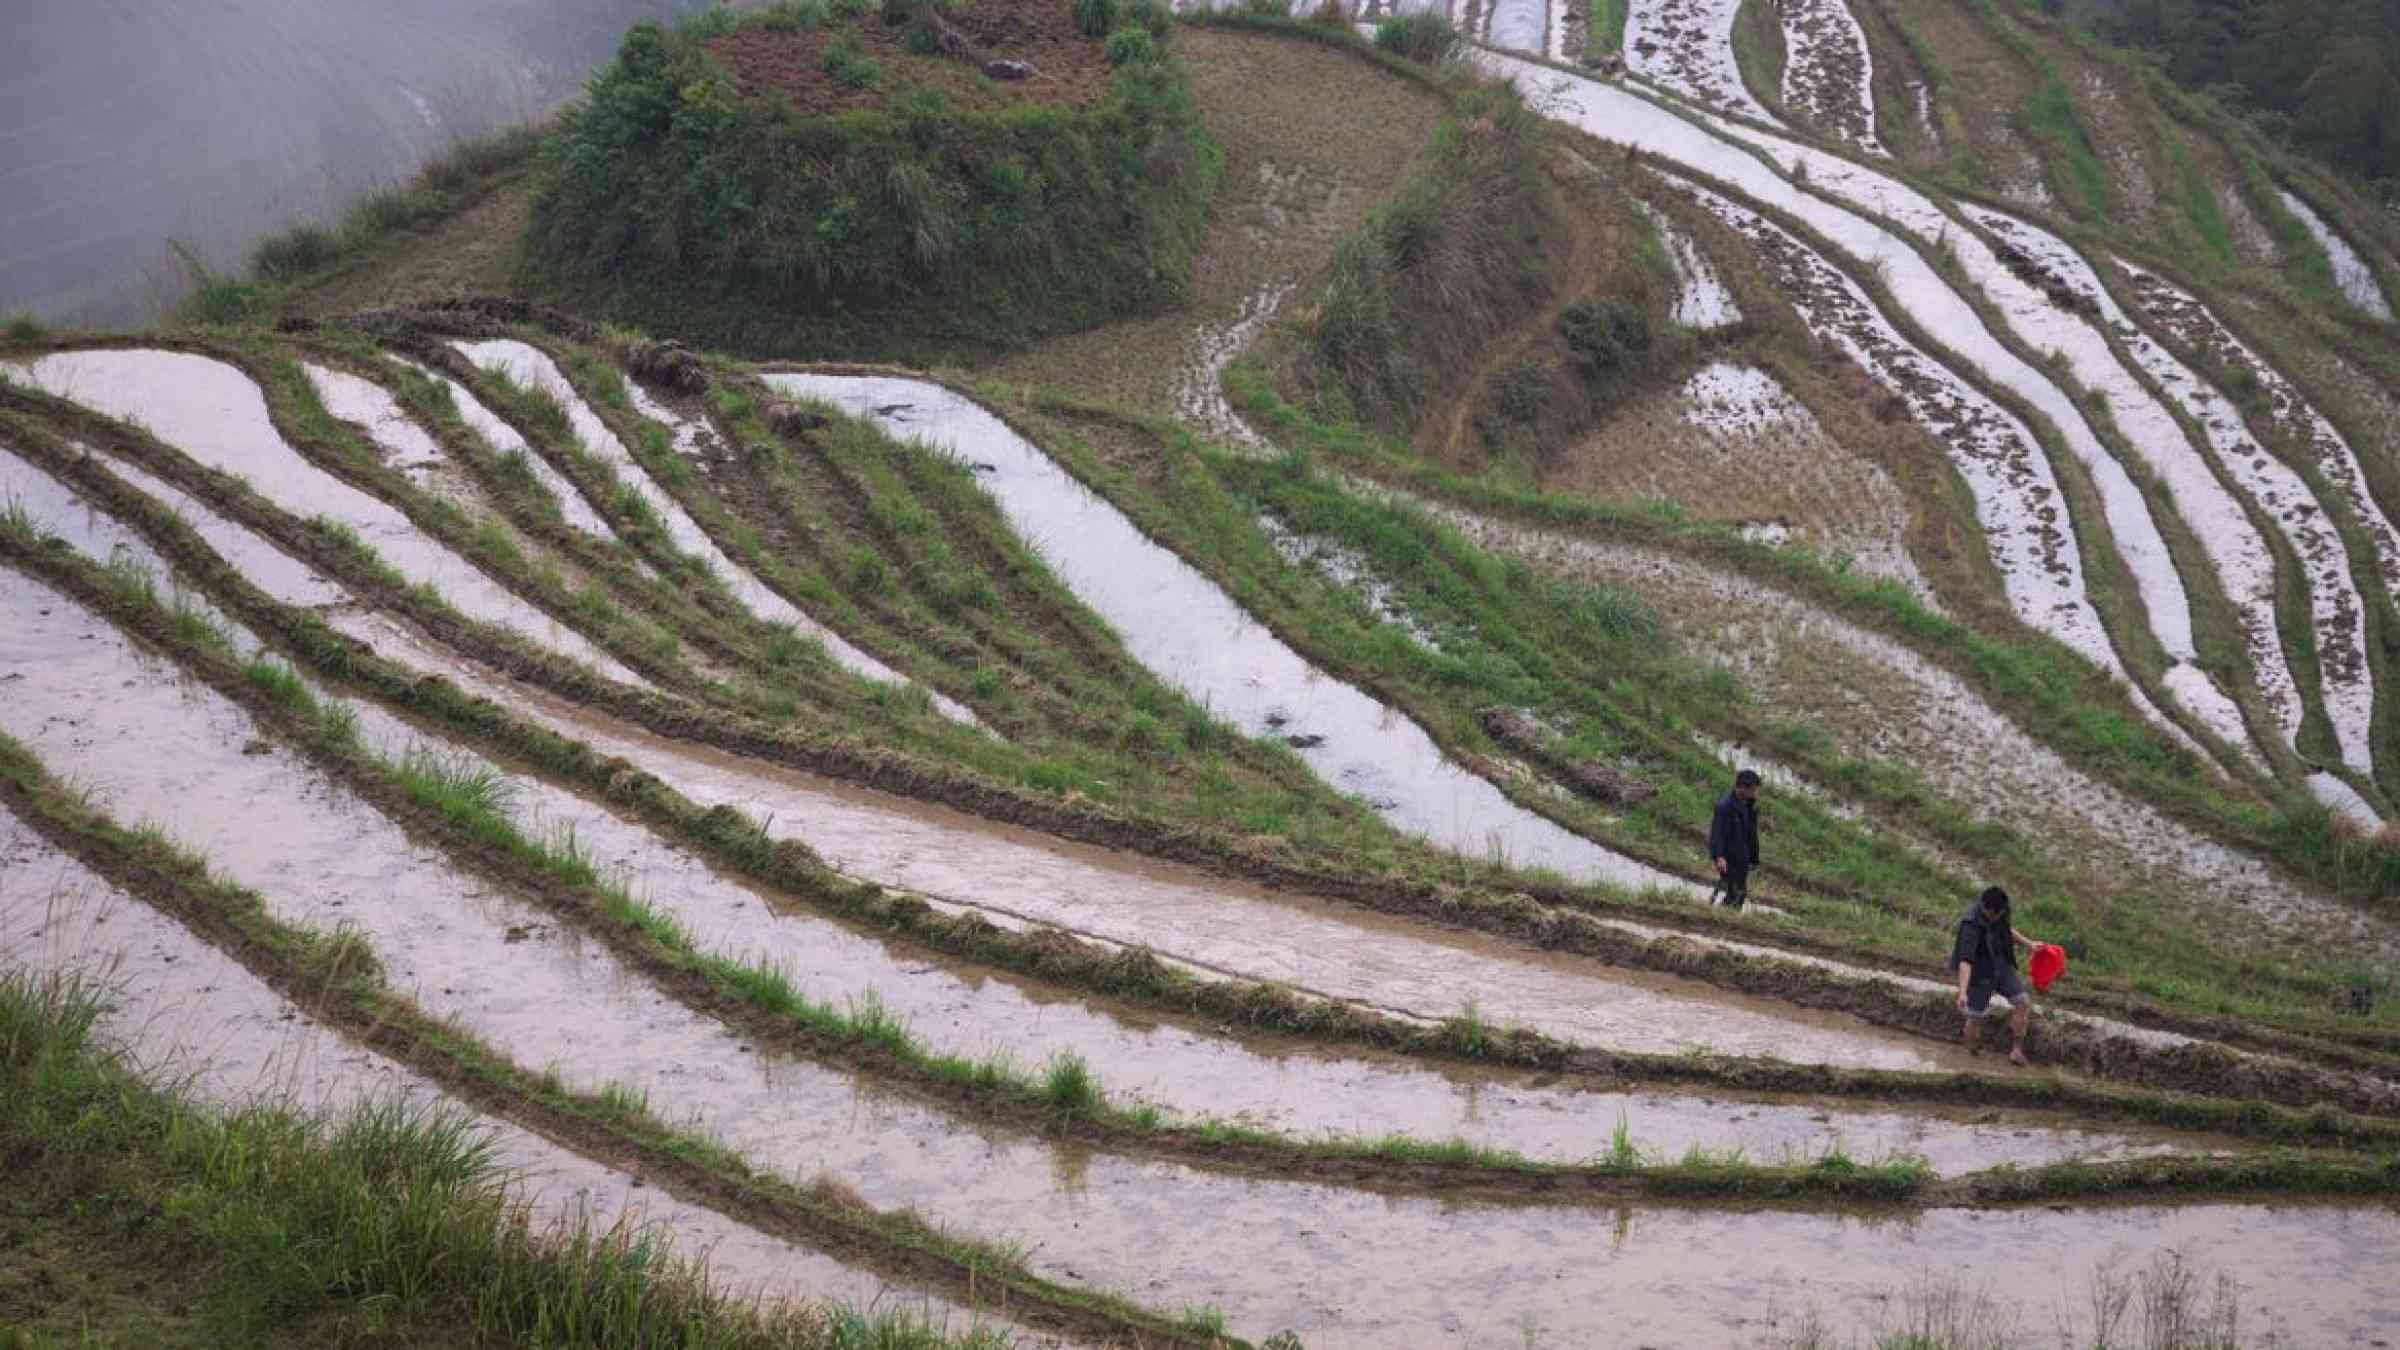 Flooded rice fields, Guangxi, China